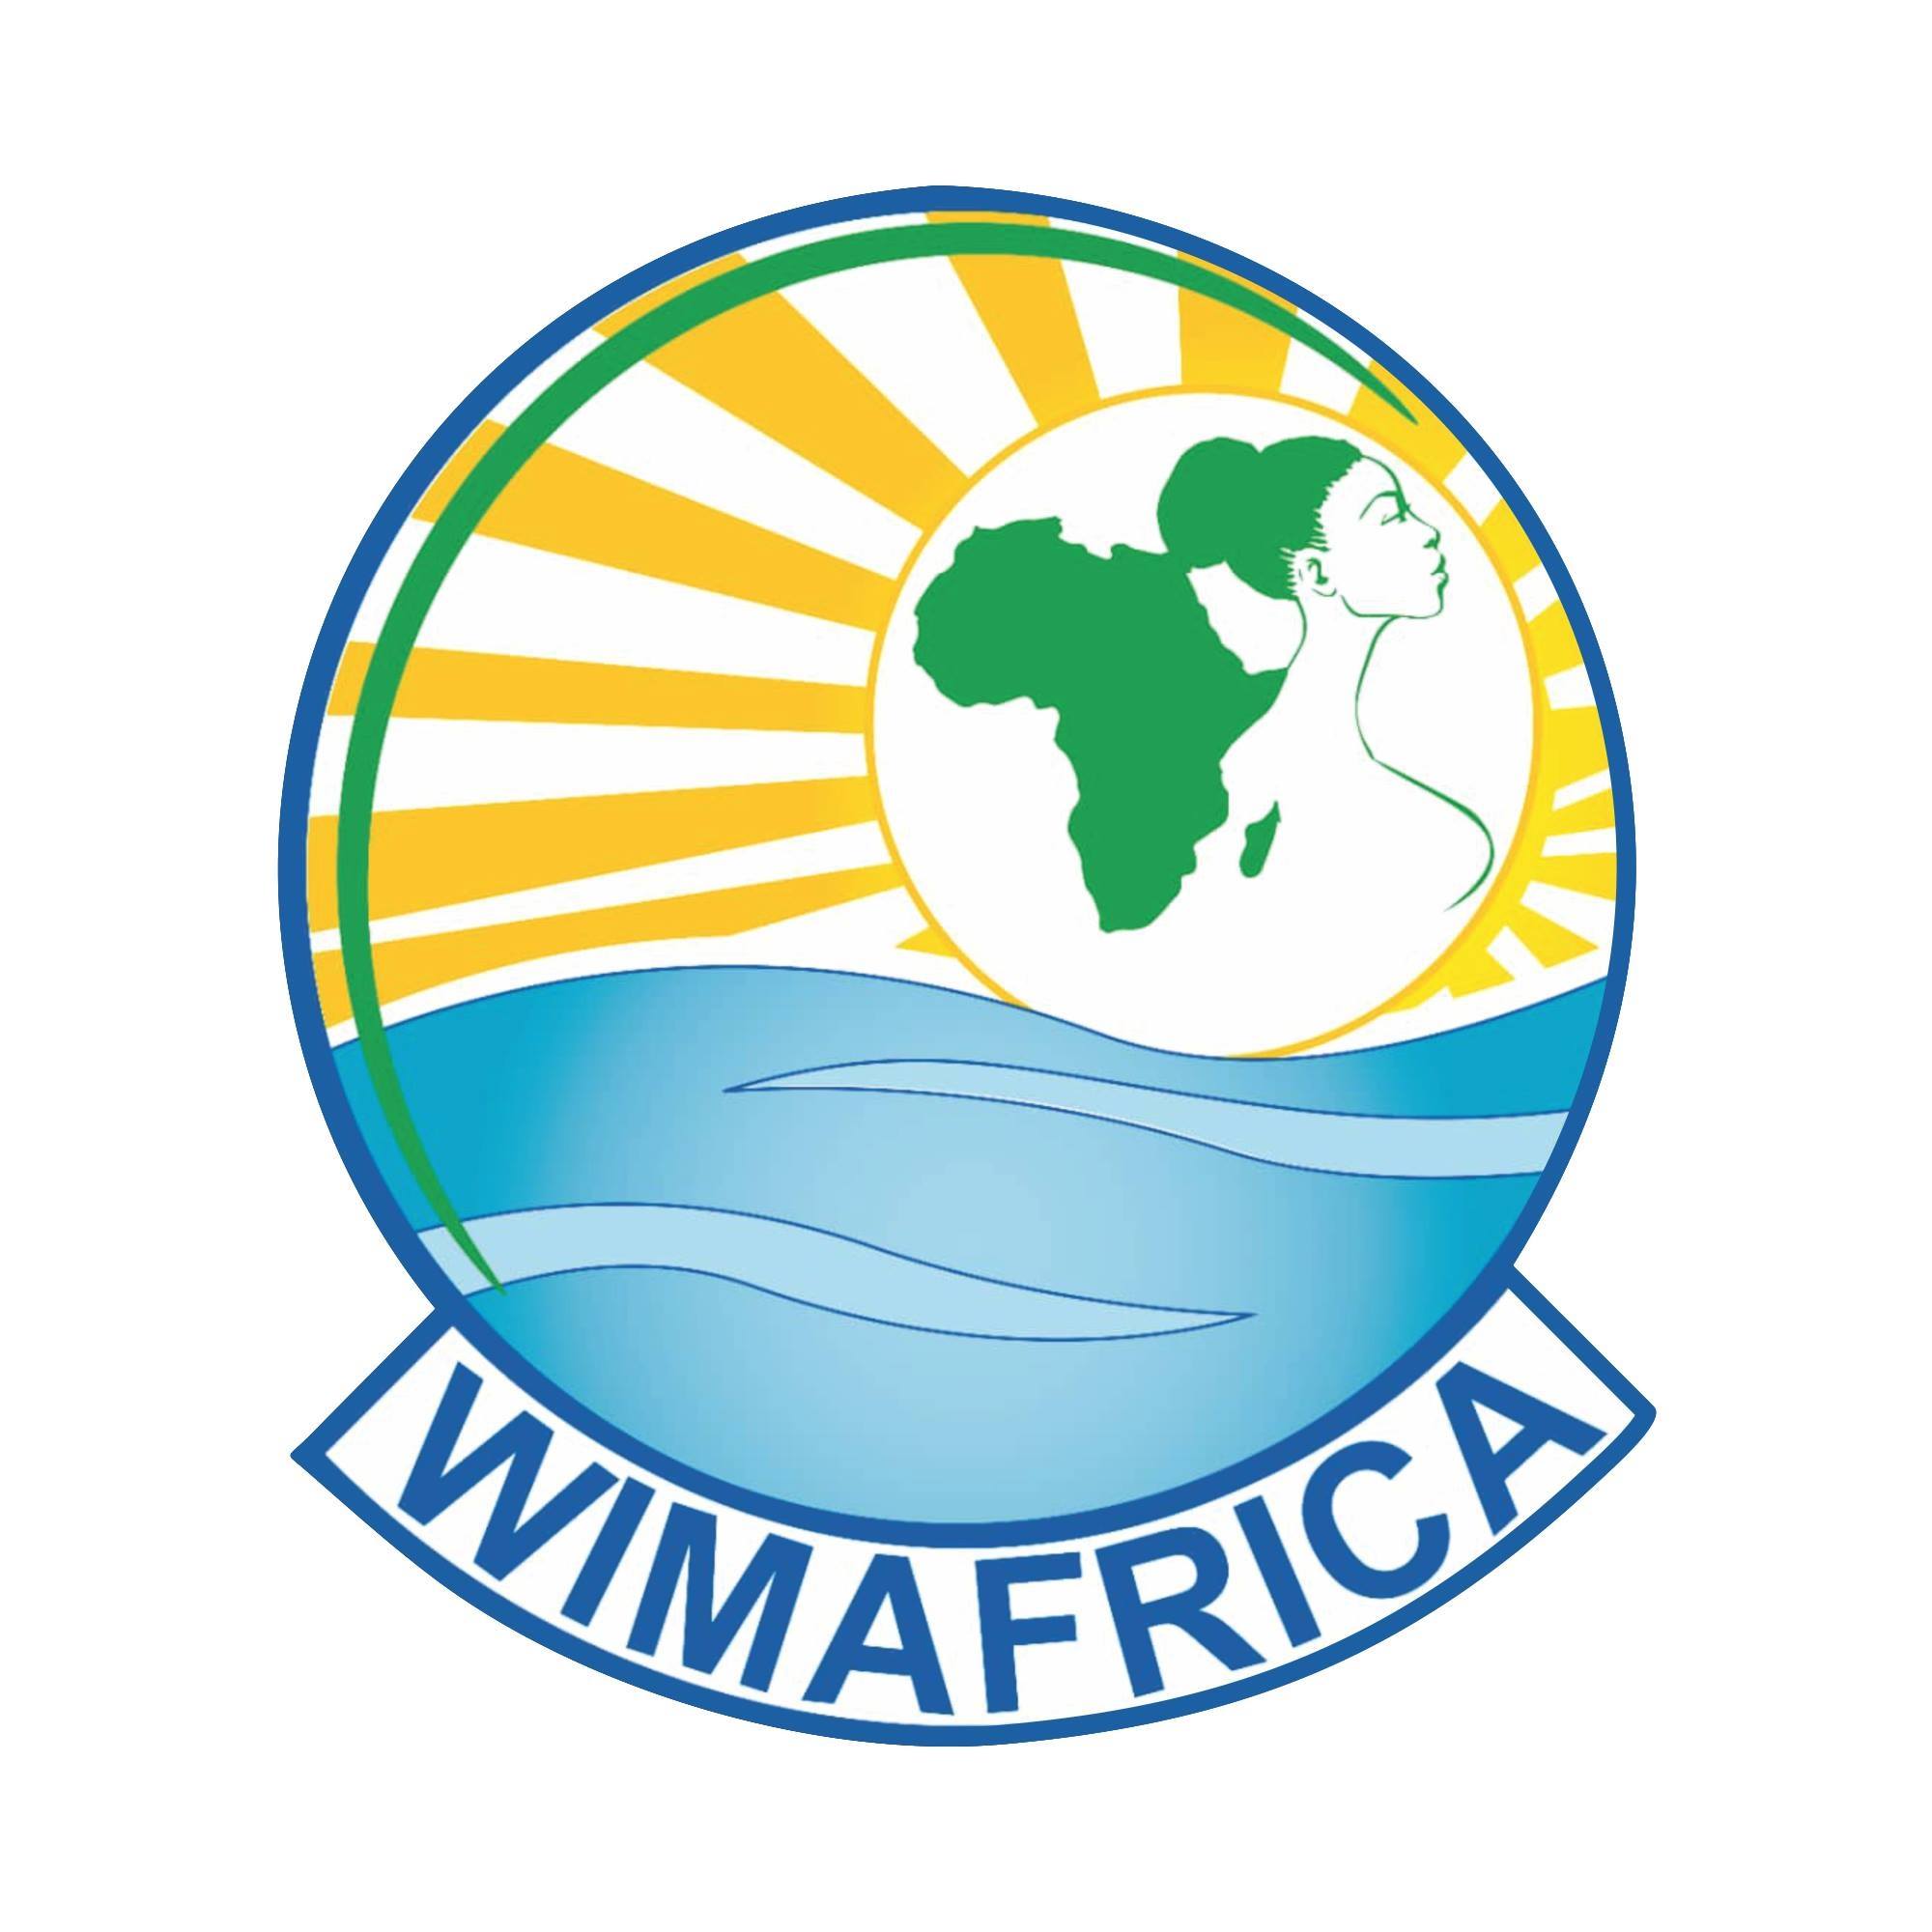 WIMAfrica obtains UN ECOSOC’s Special Consultative Status